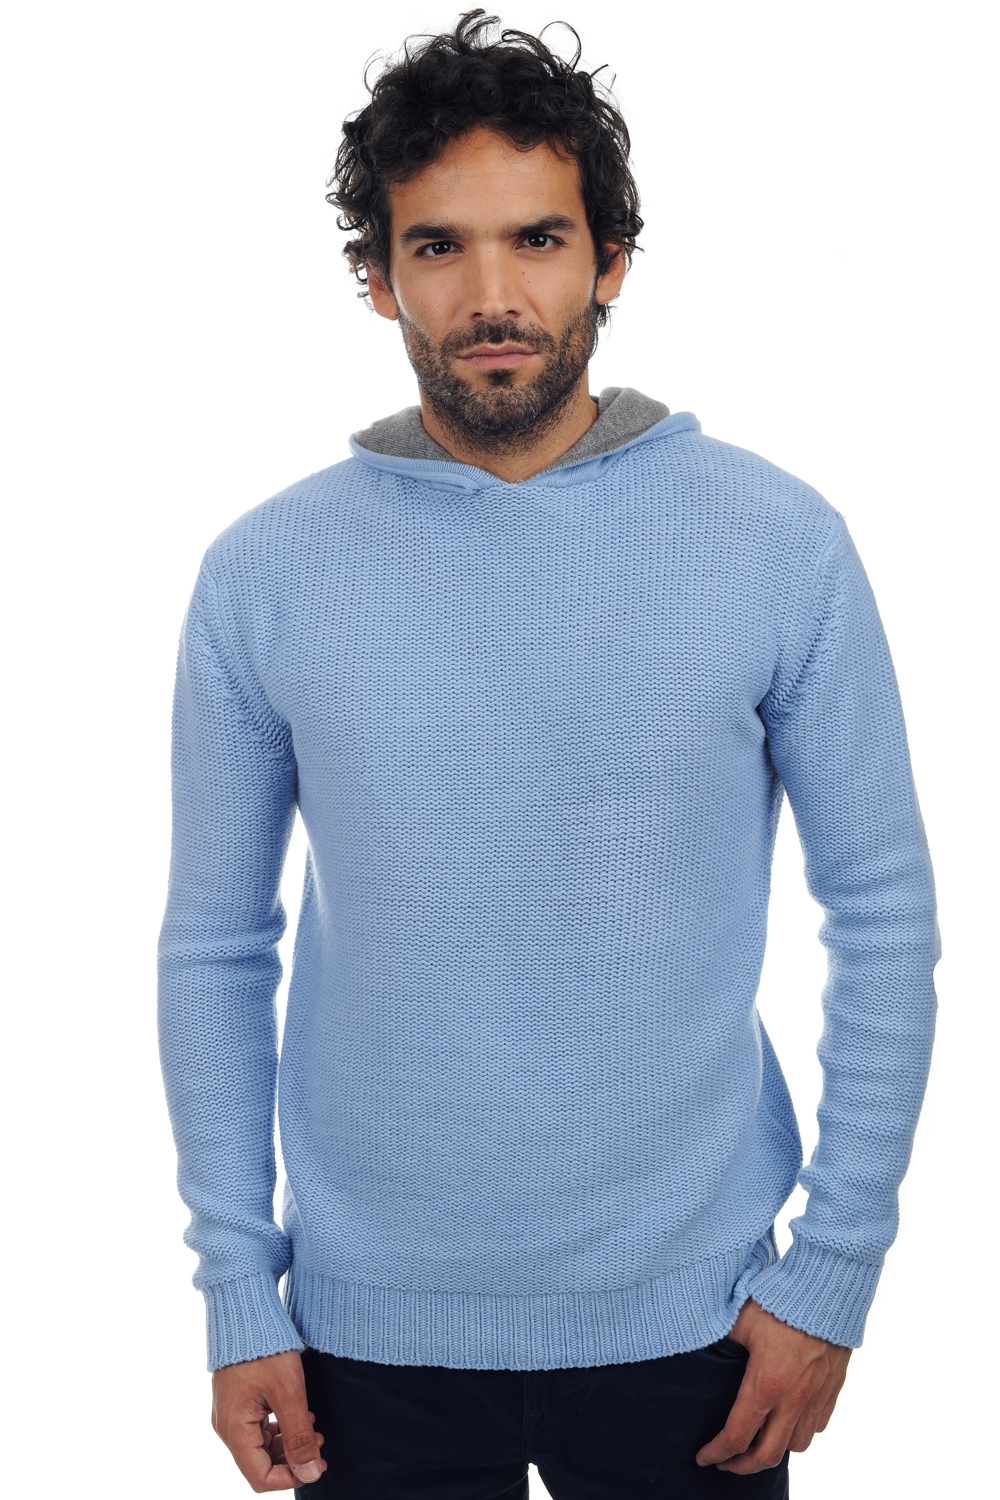 Yak men chunky sweater conor sky blue grey marl 2xl